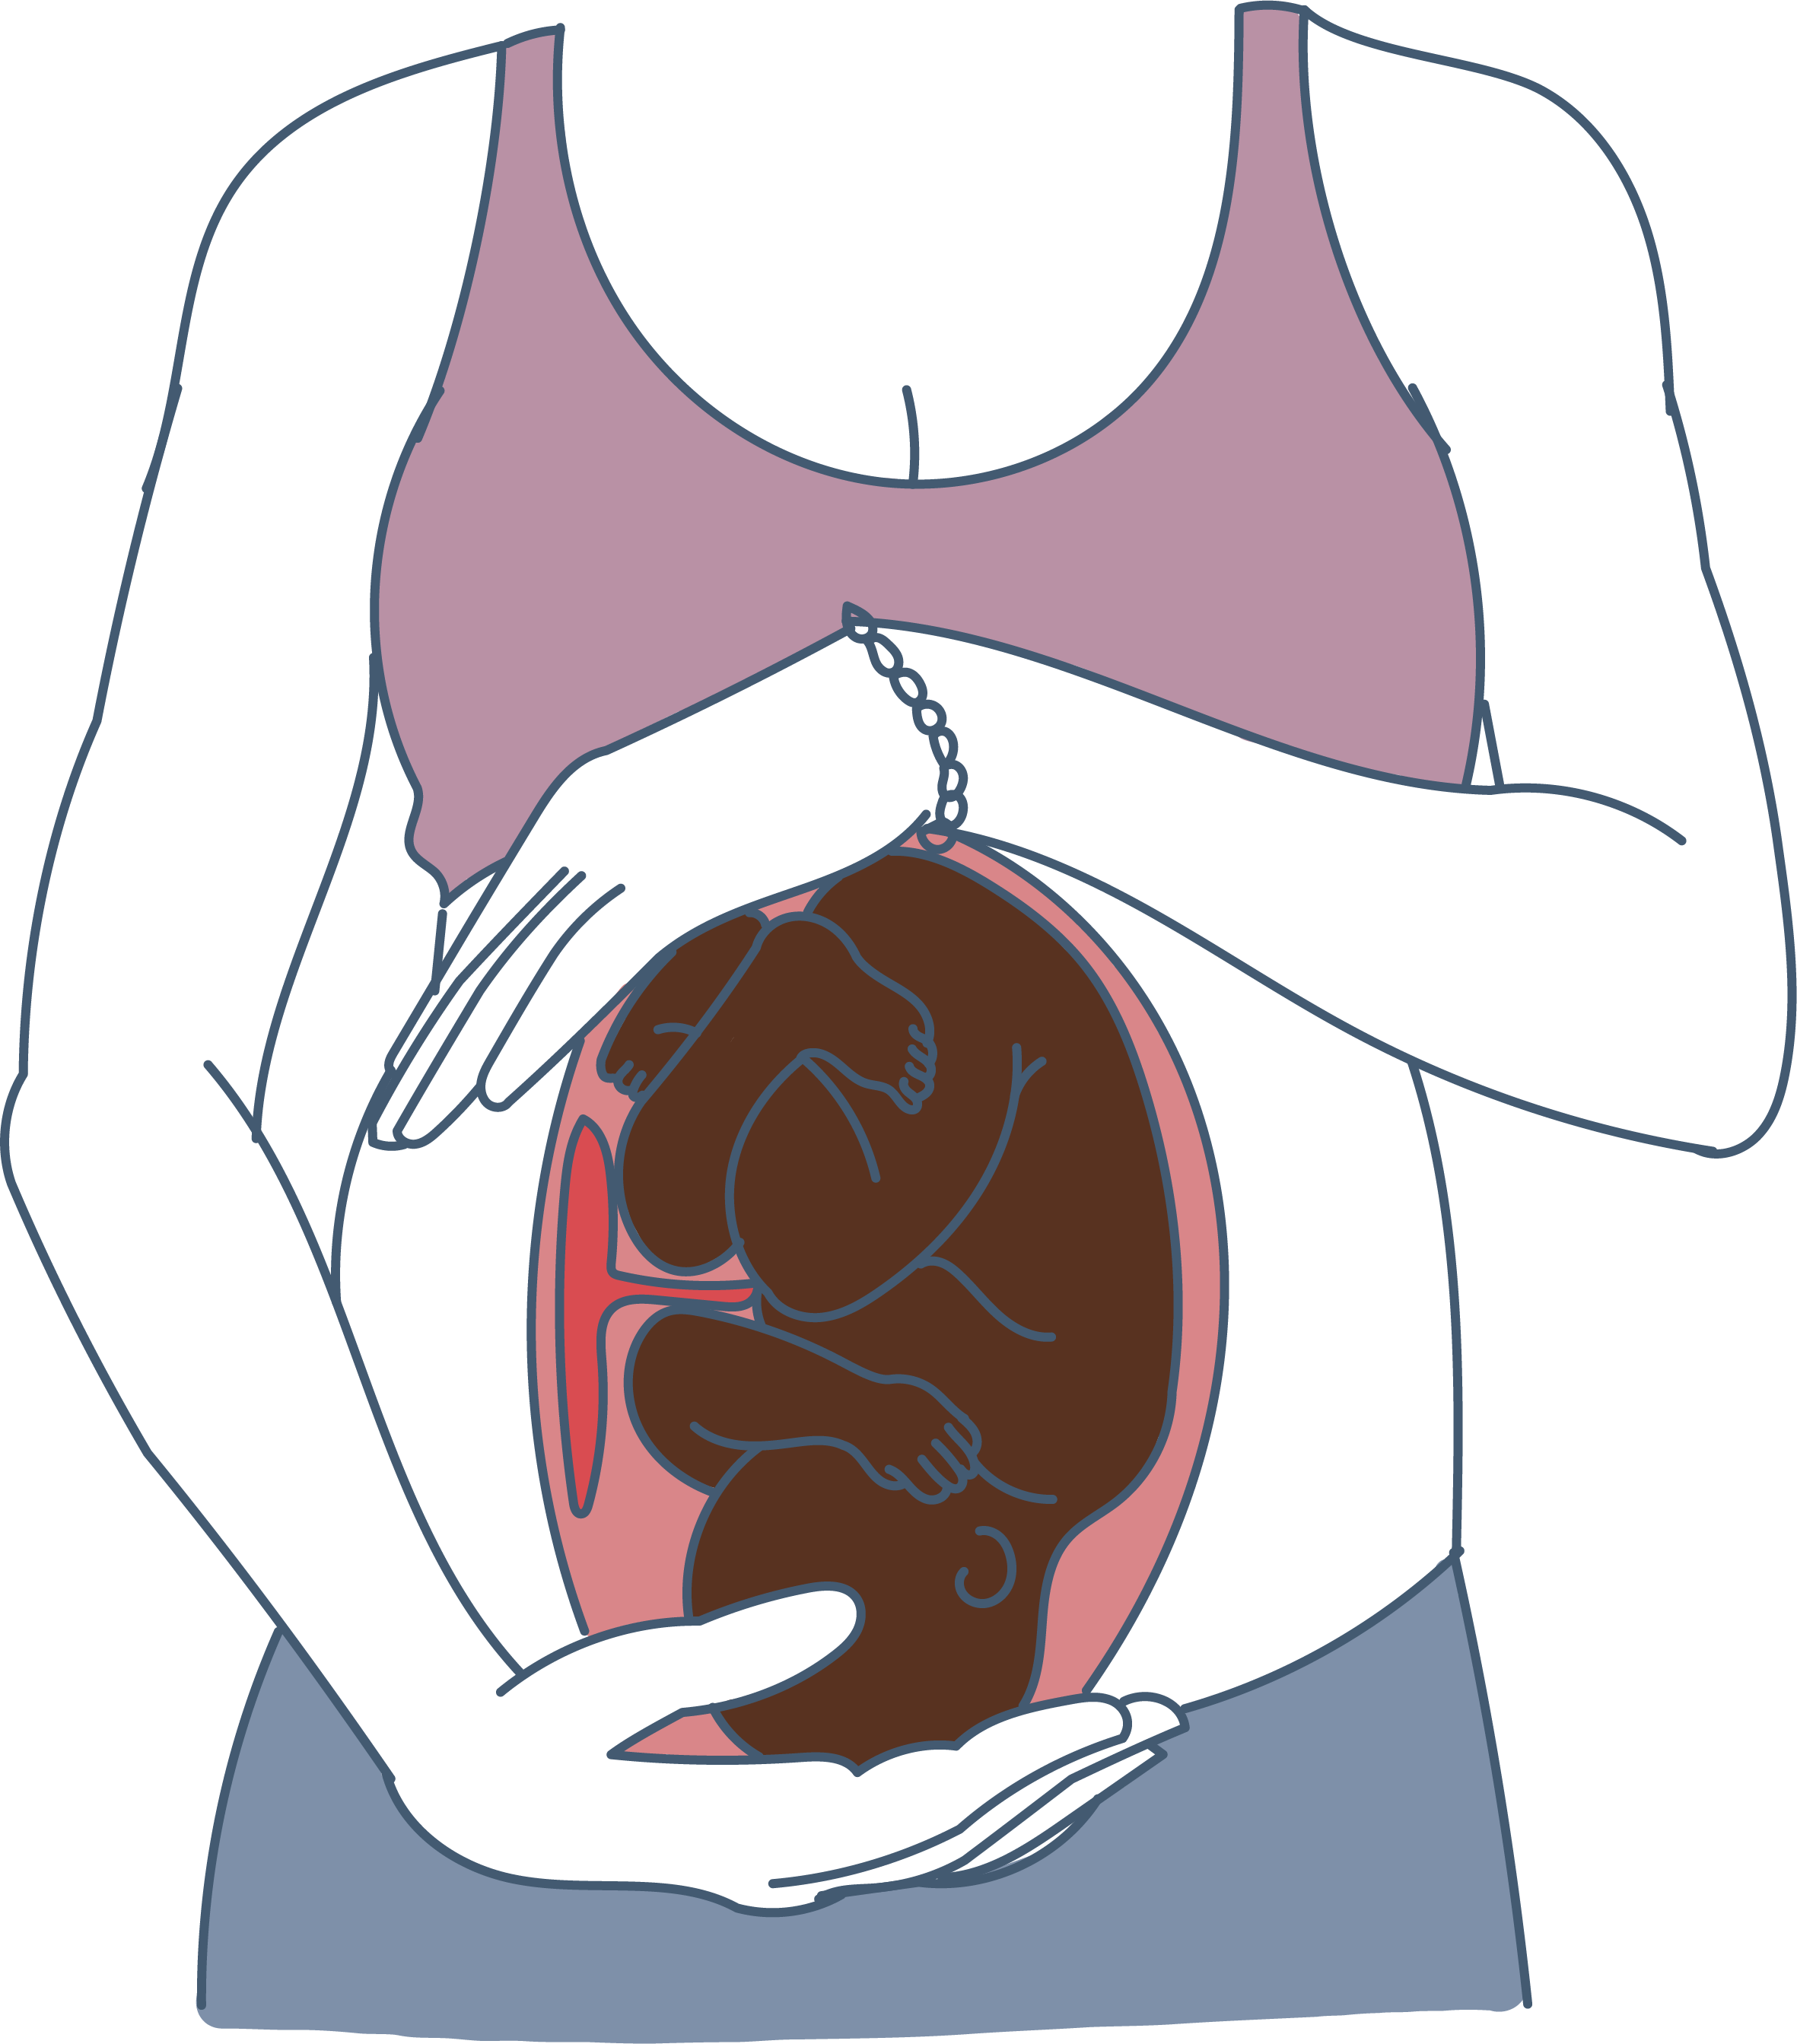 cephalic presentation at 18 weeks pregnant